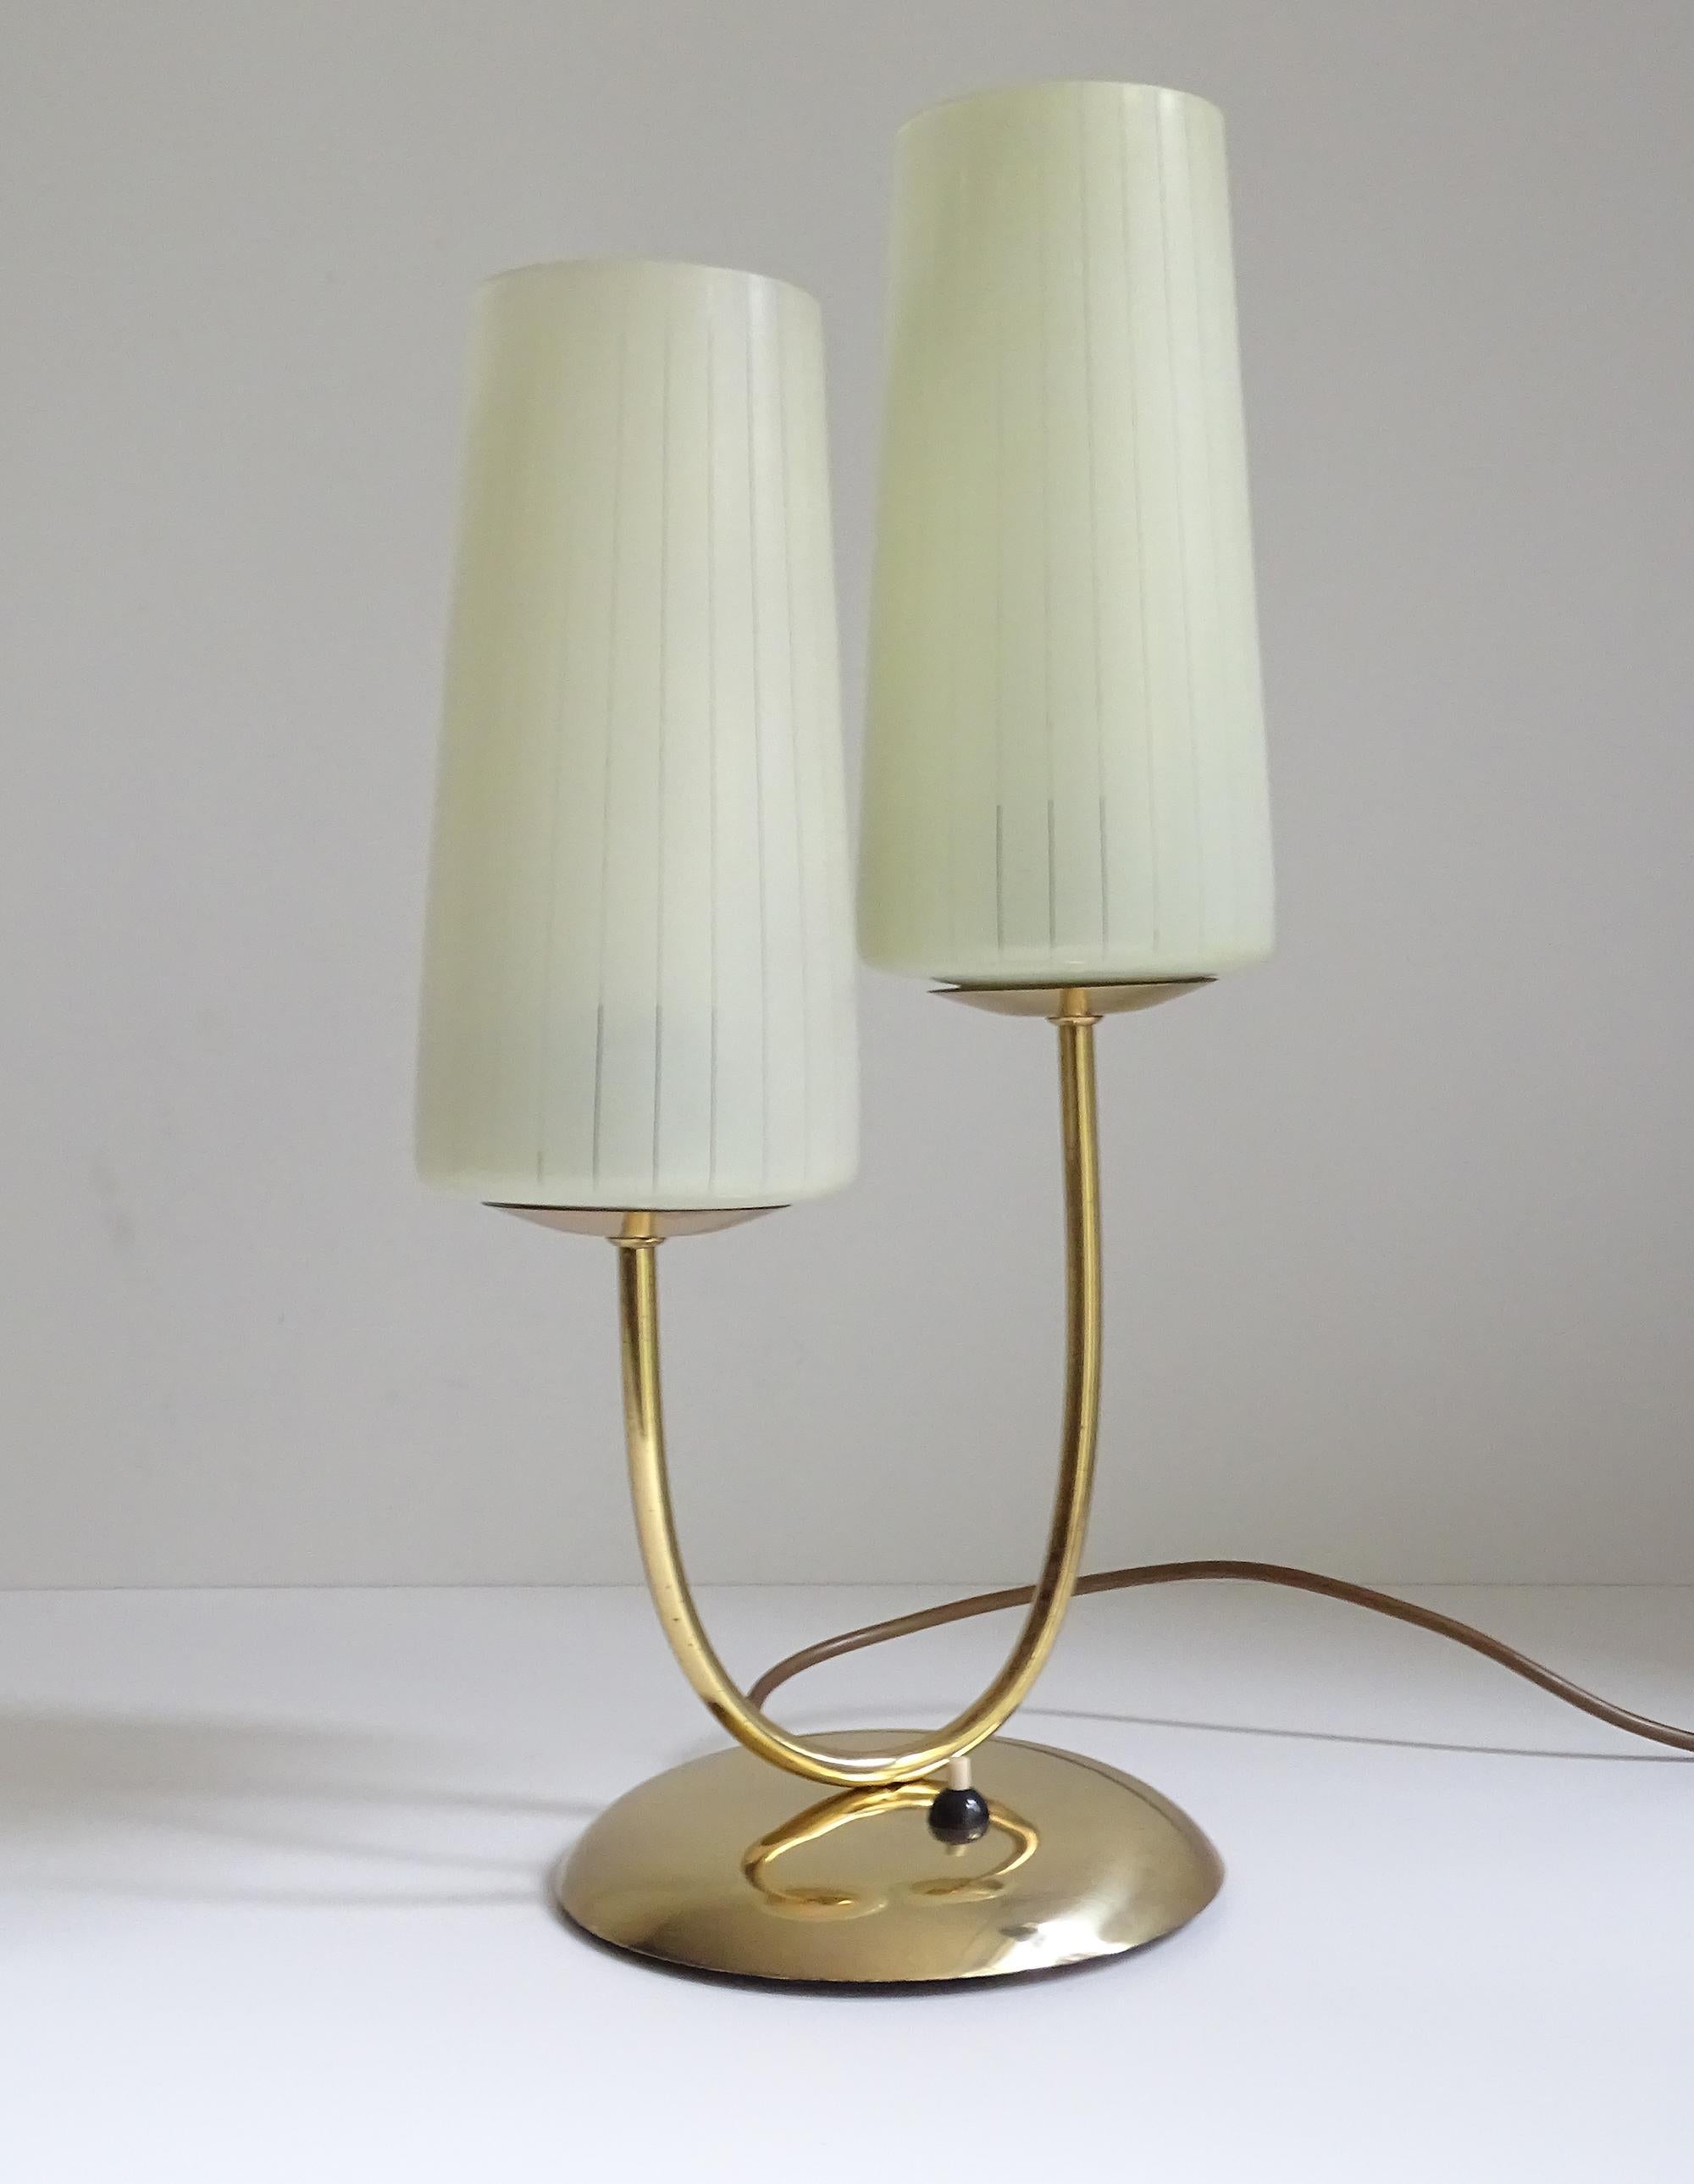 1960's lamp styles